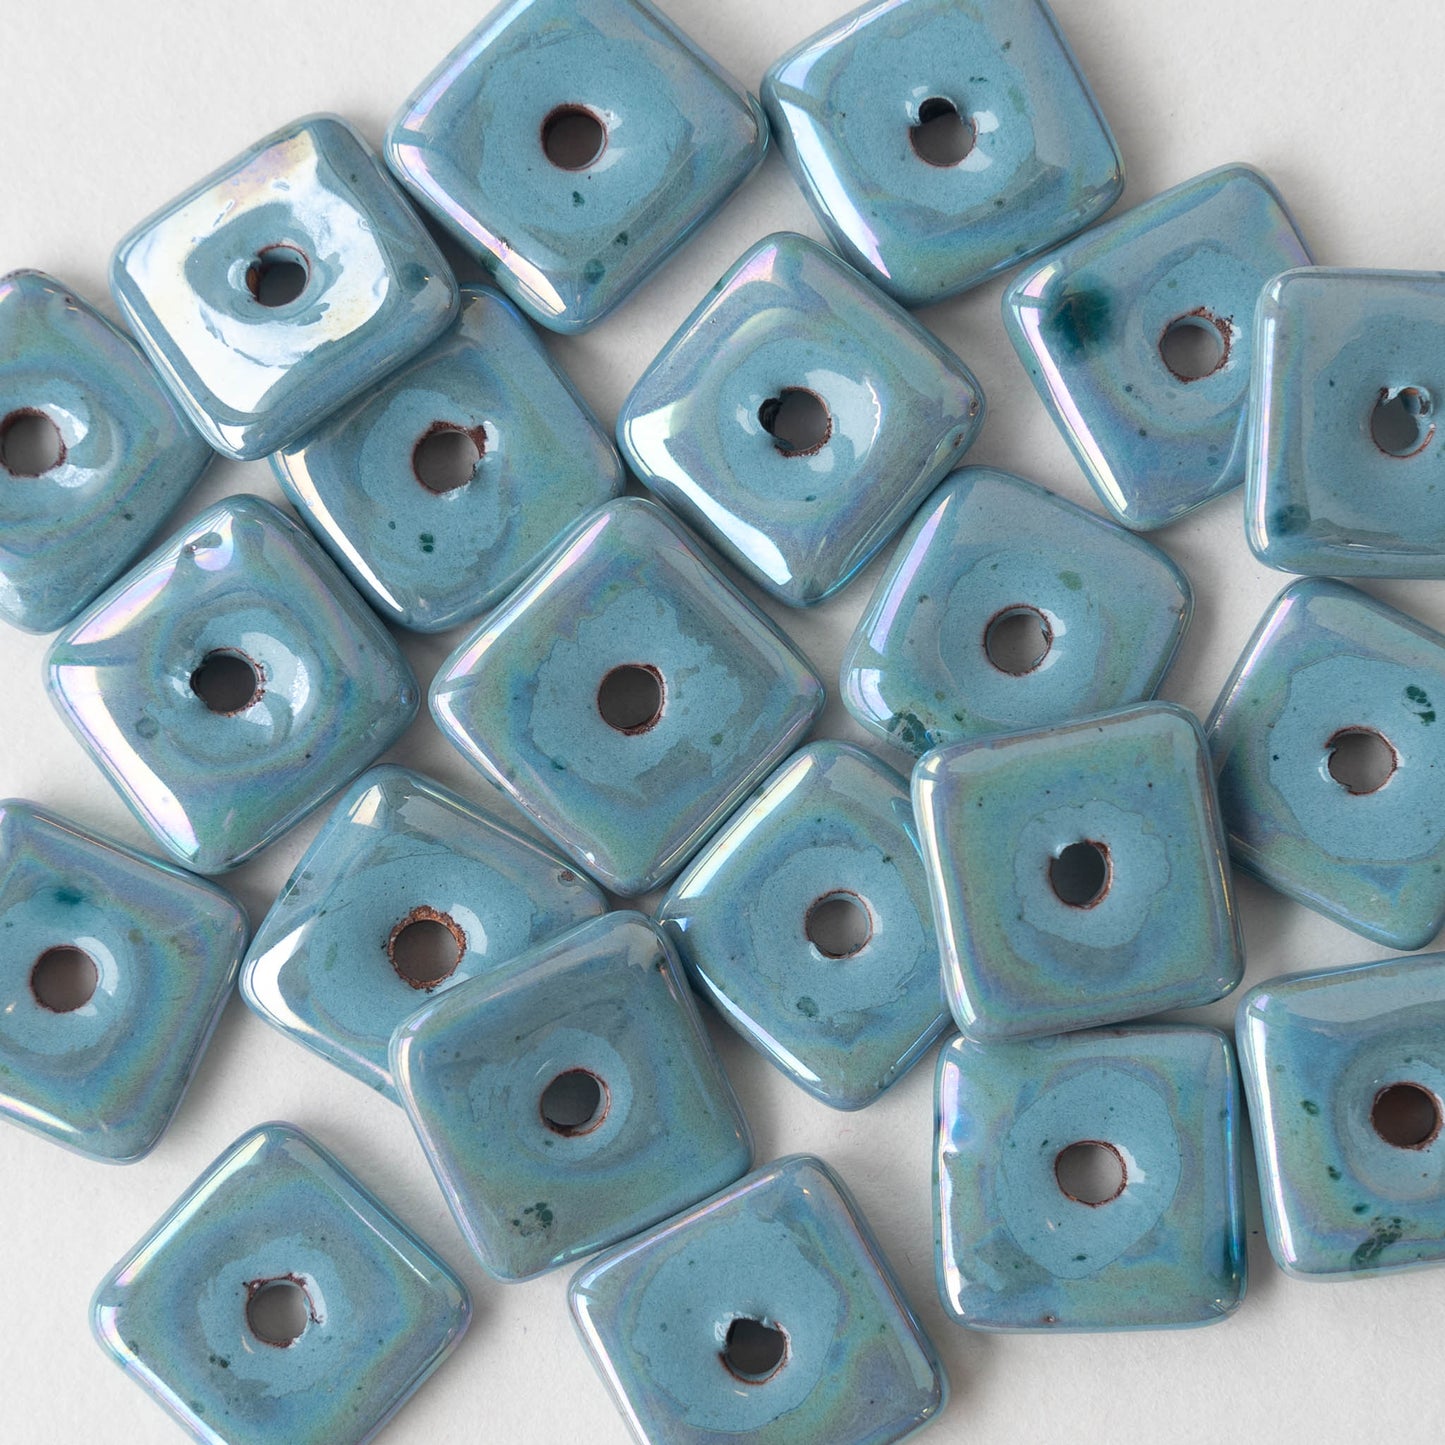 15mm Glazed Ceramic Square Tiles - Iridescent Light Blue - 10 or 30